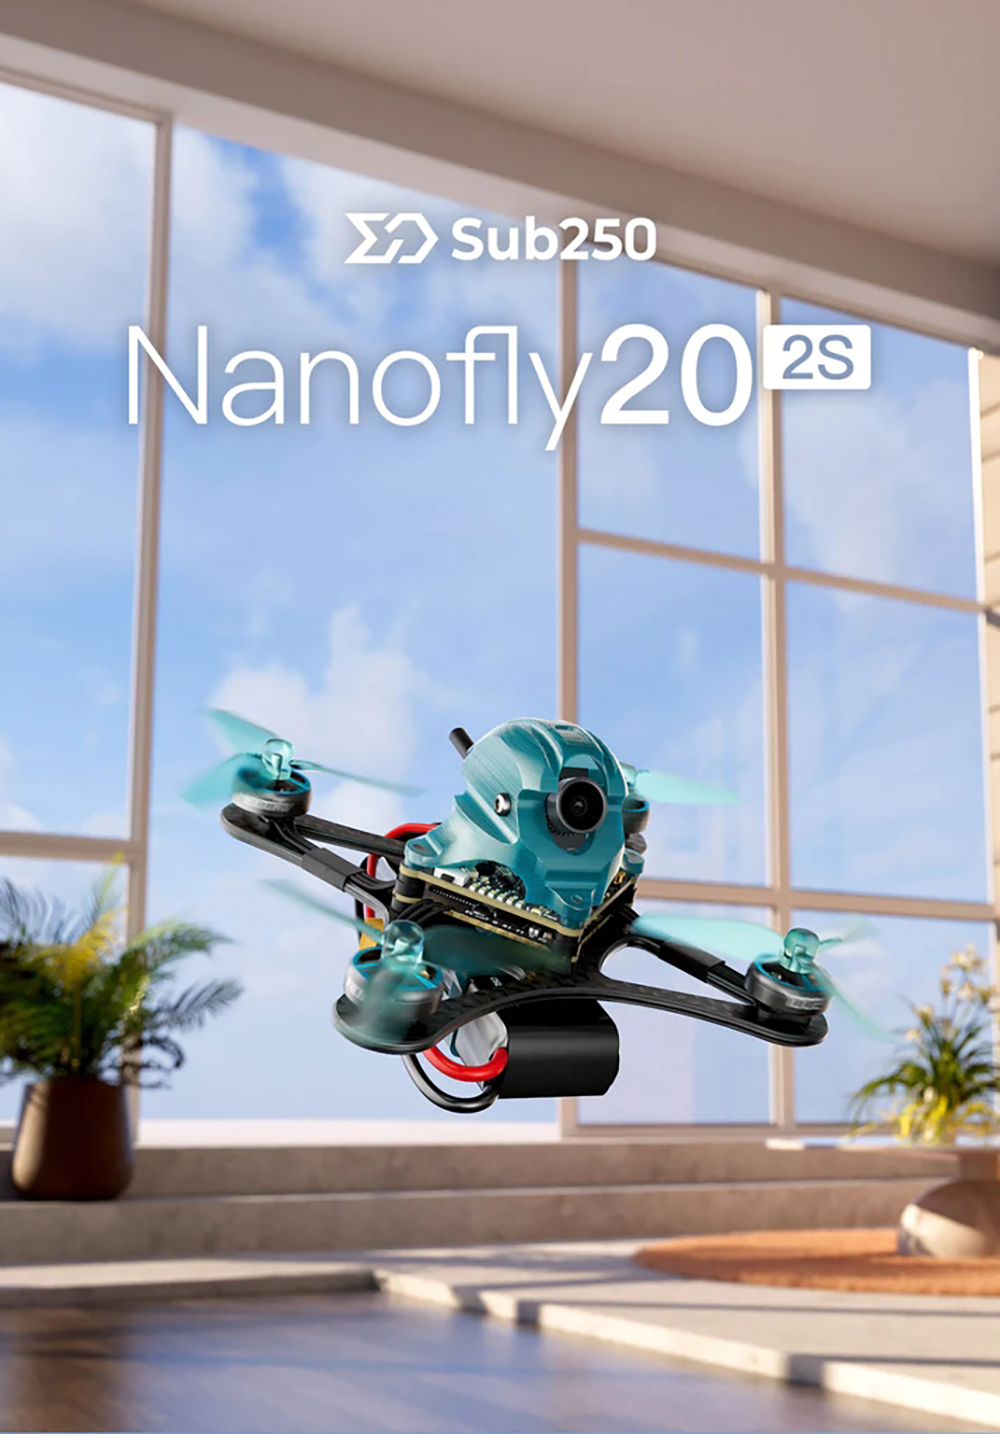 Sub250 Nanofly20 2S 2 Inch New Upgraded Analog / HDZero / Walksnail Avatar FPV Racing Drone